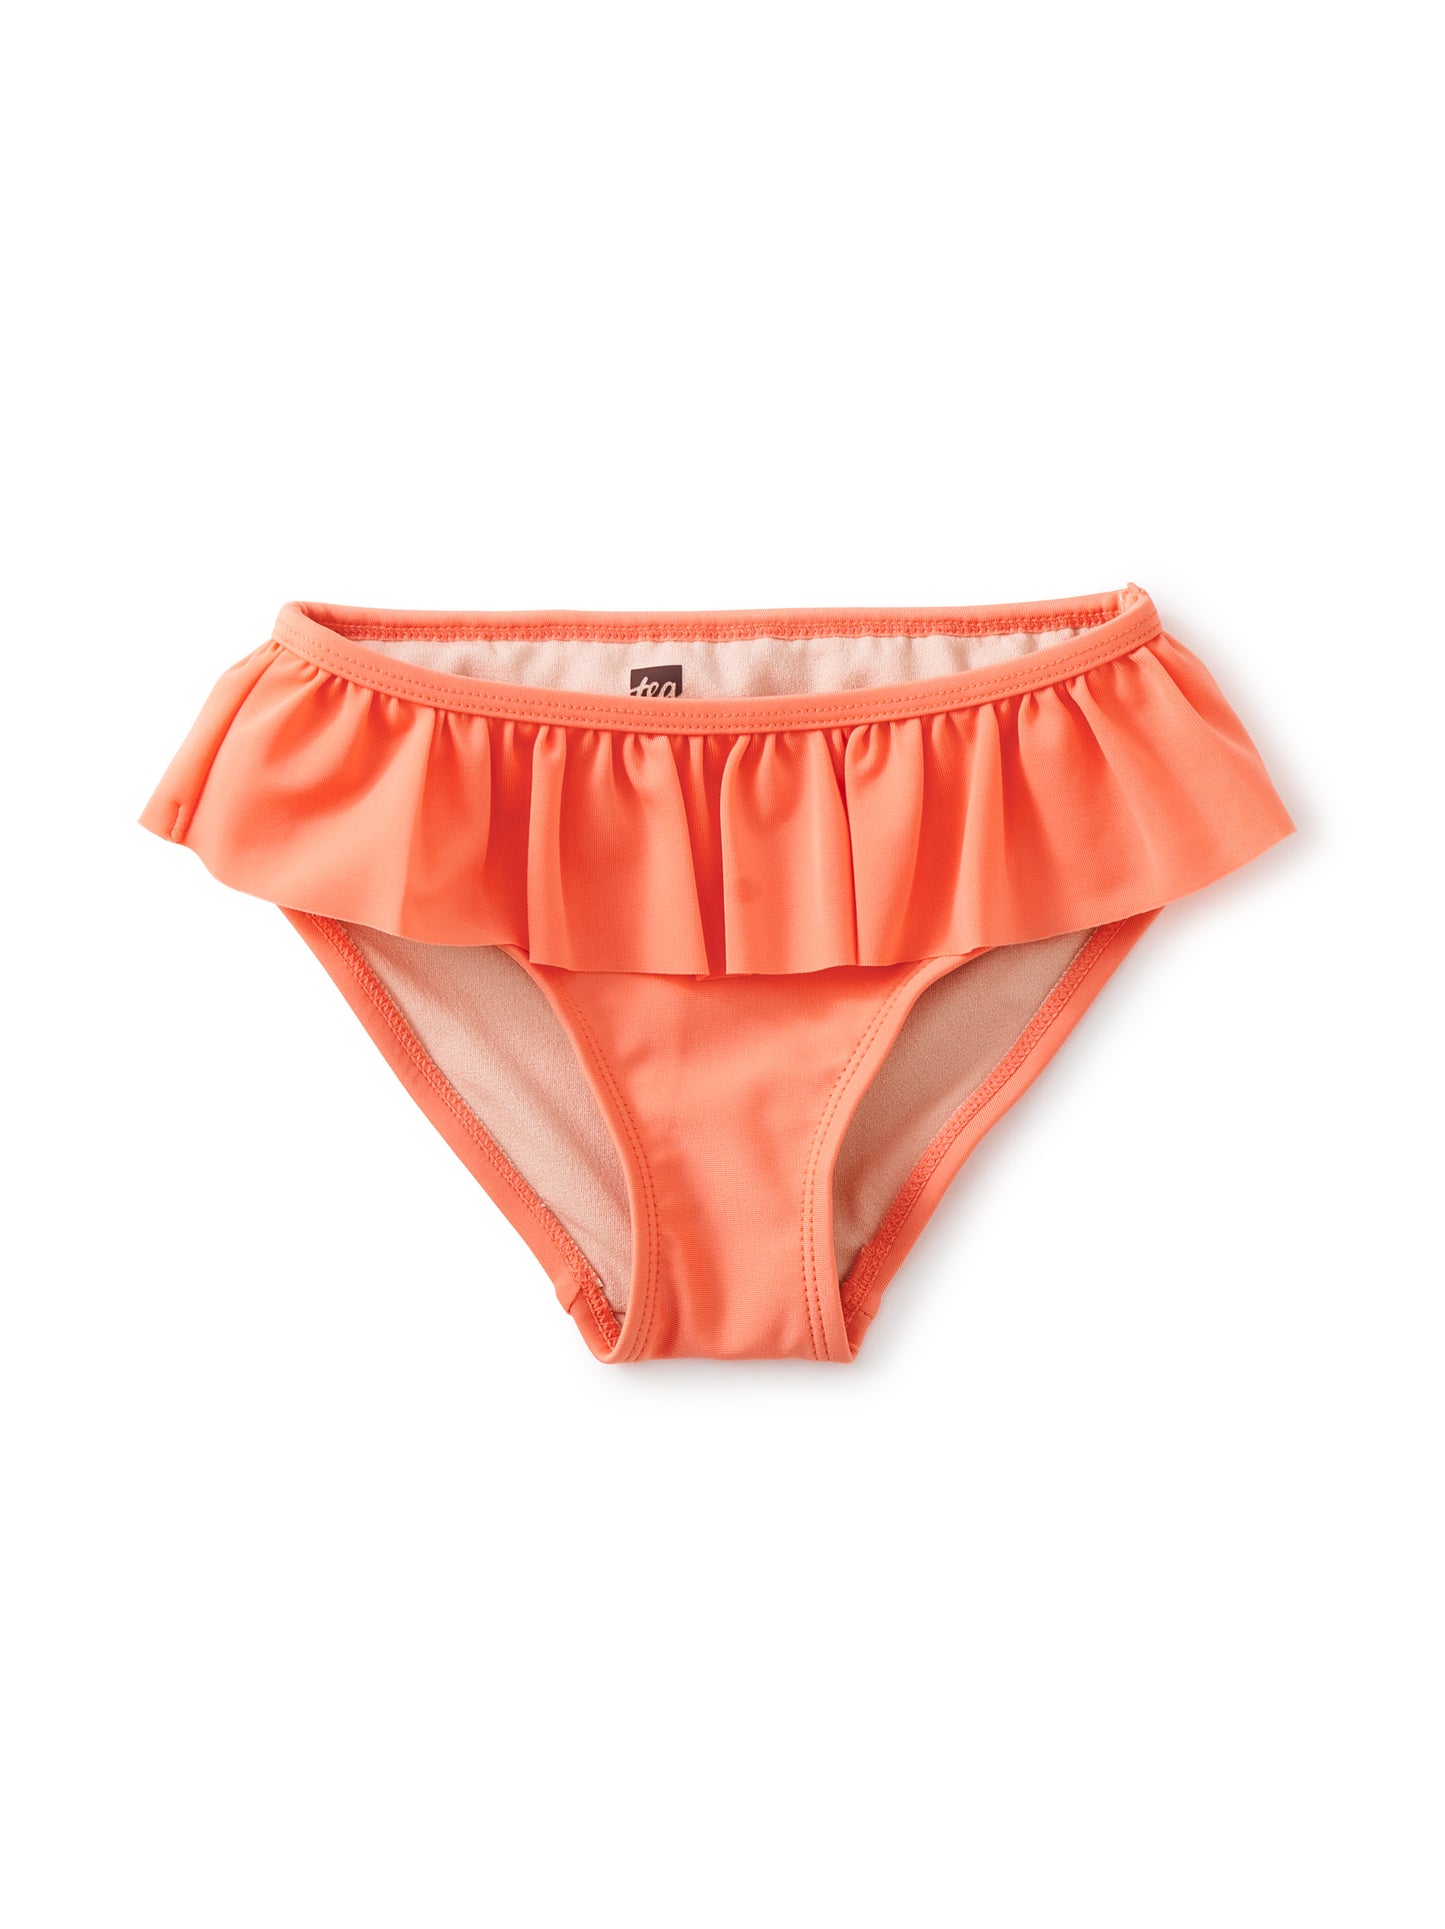 Butterfly Glow Tankini with Peach Blossom Ruffled Bikini Bottoms